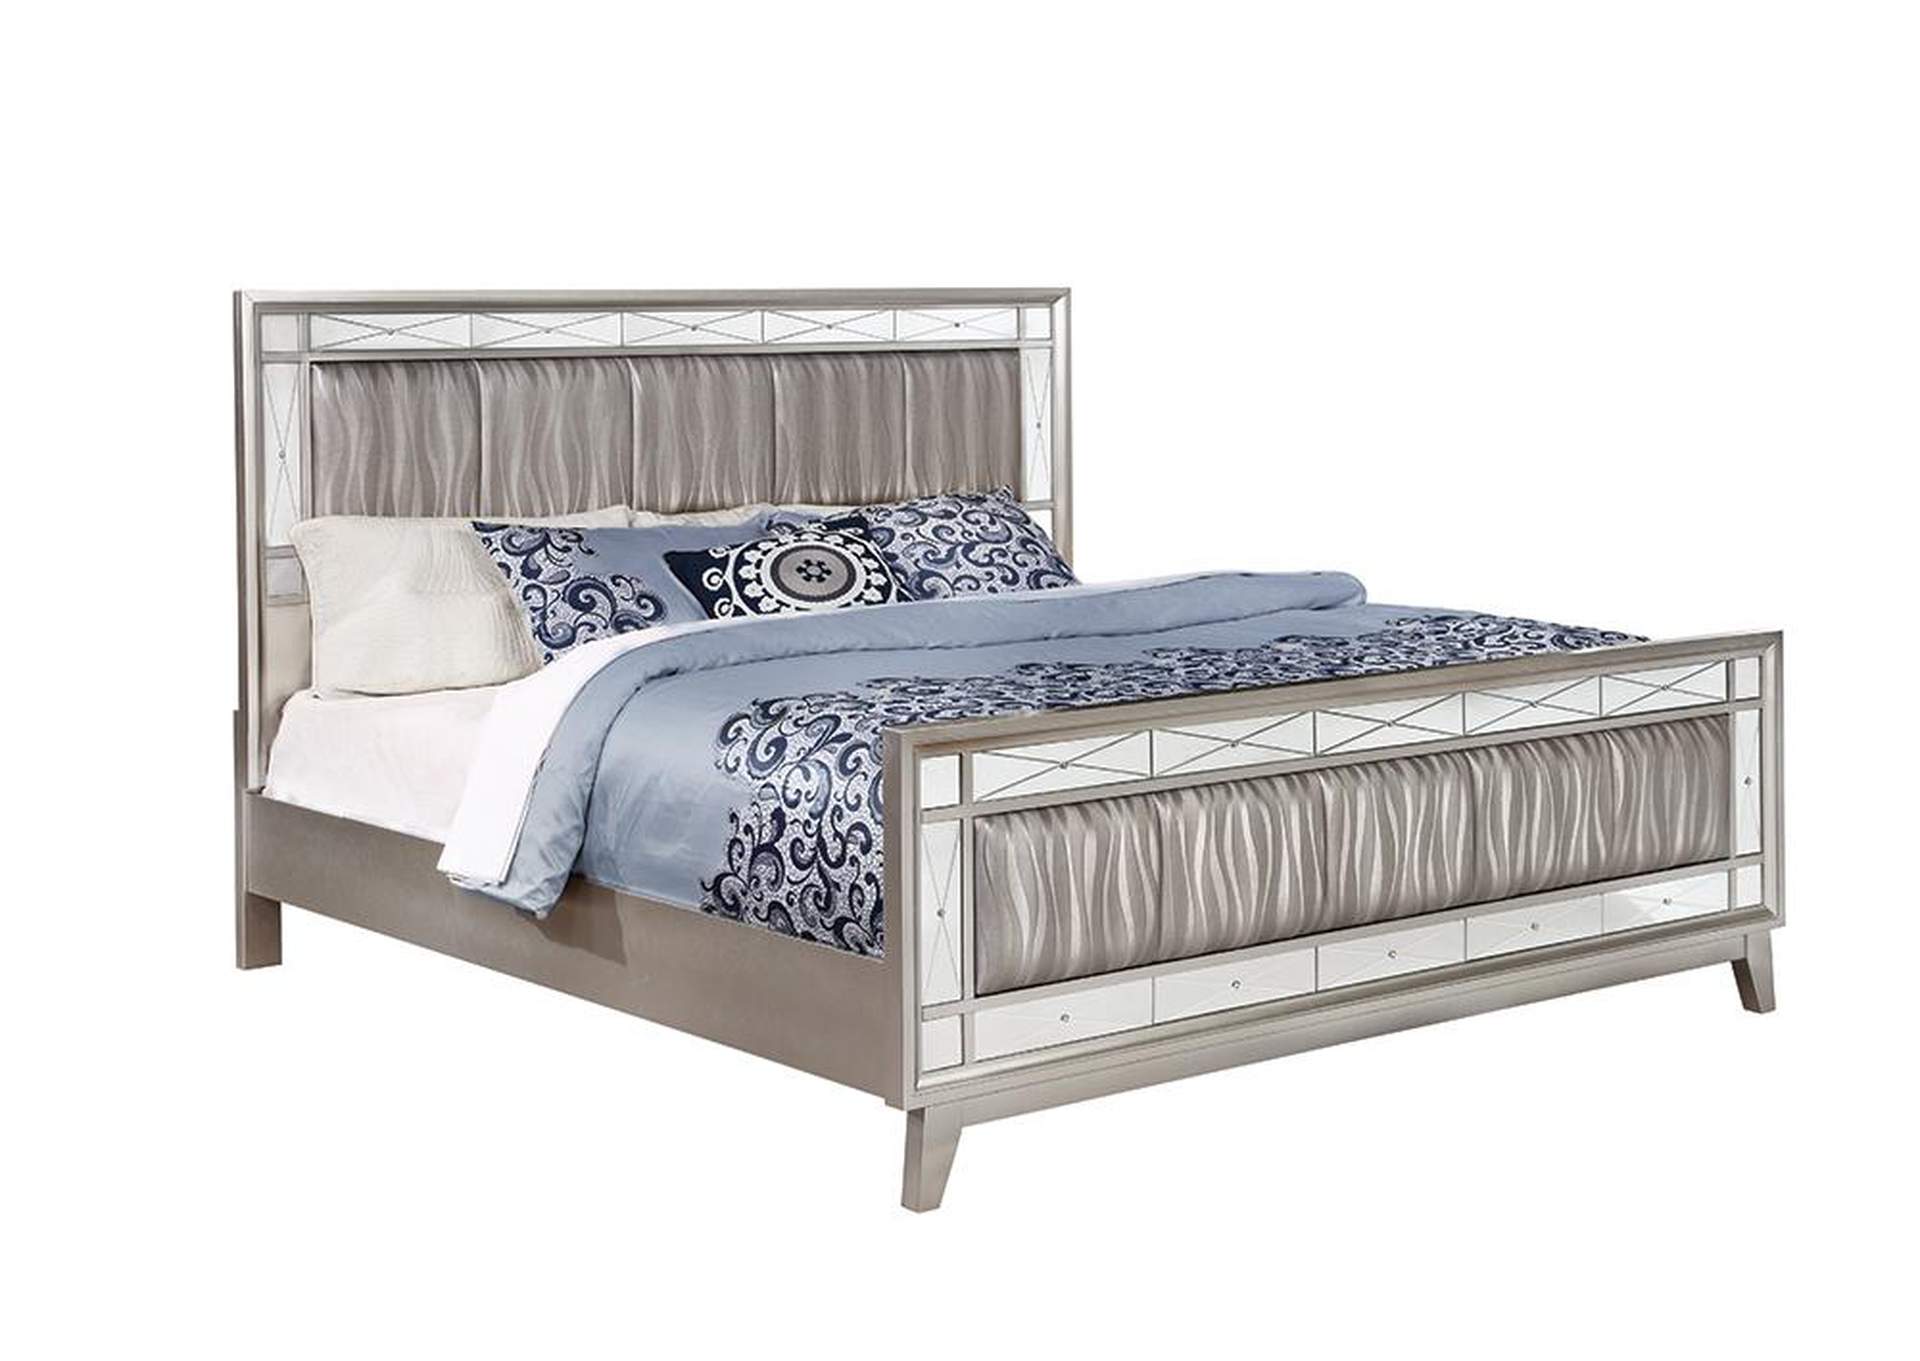 Leighton Contemporary Metallic Full Bed,Coaster Furniture